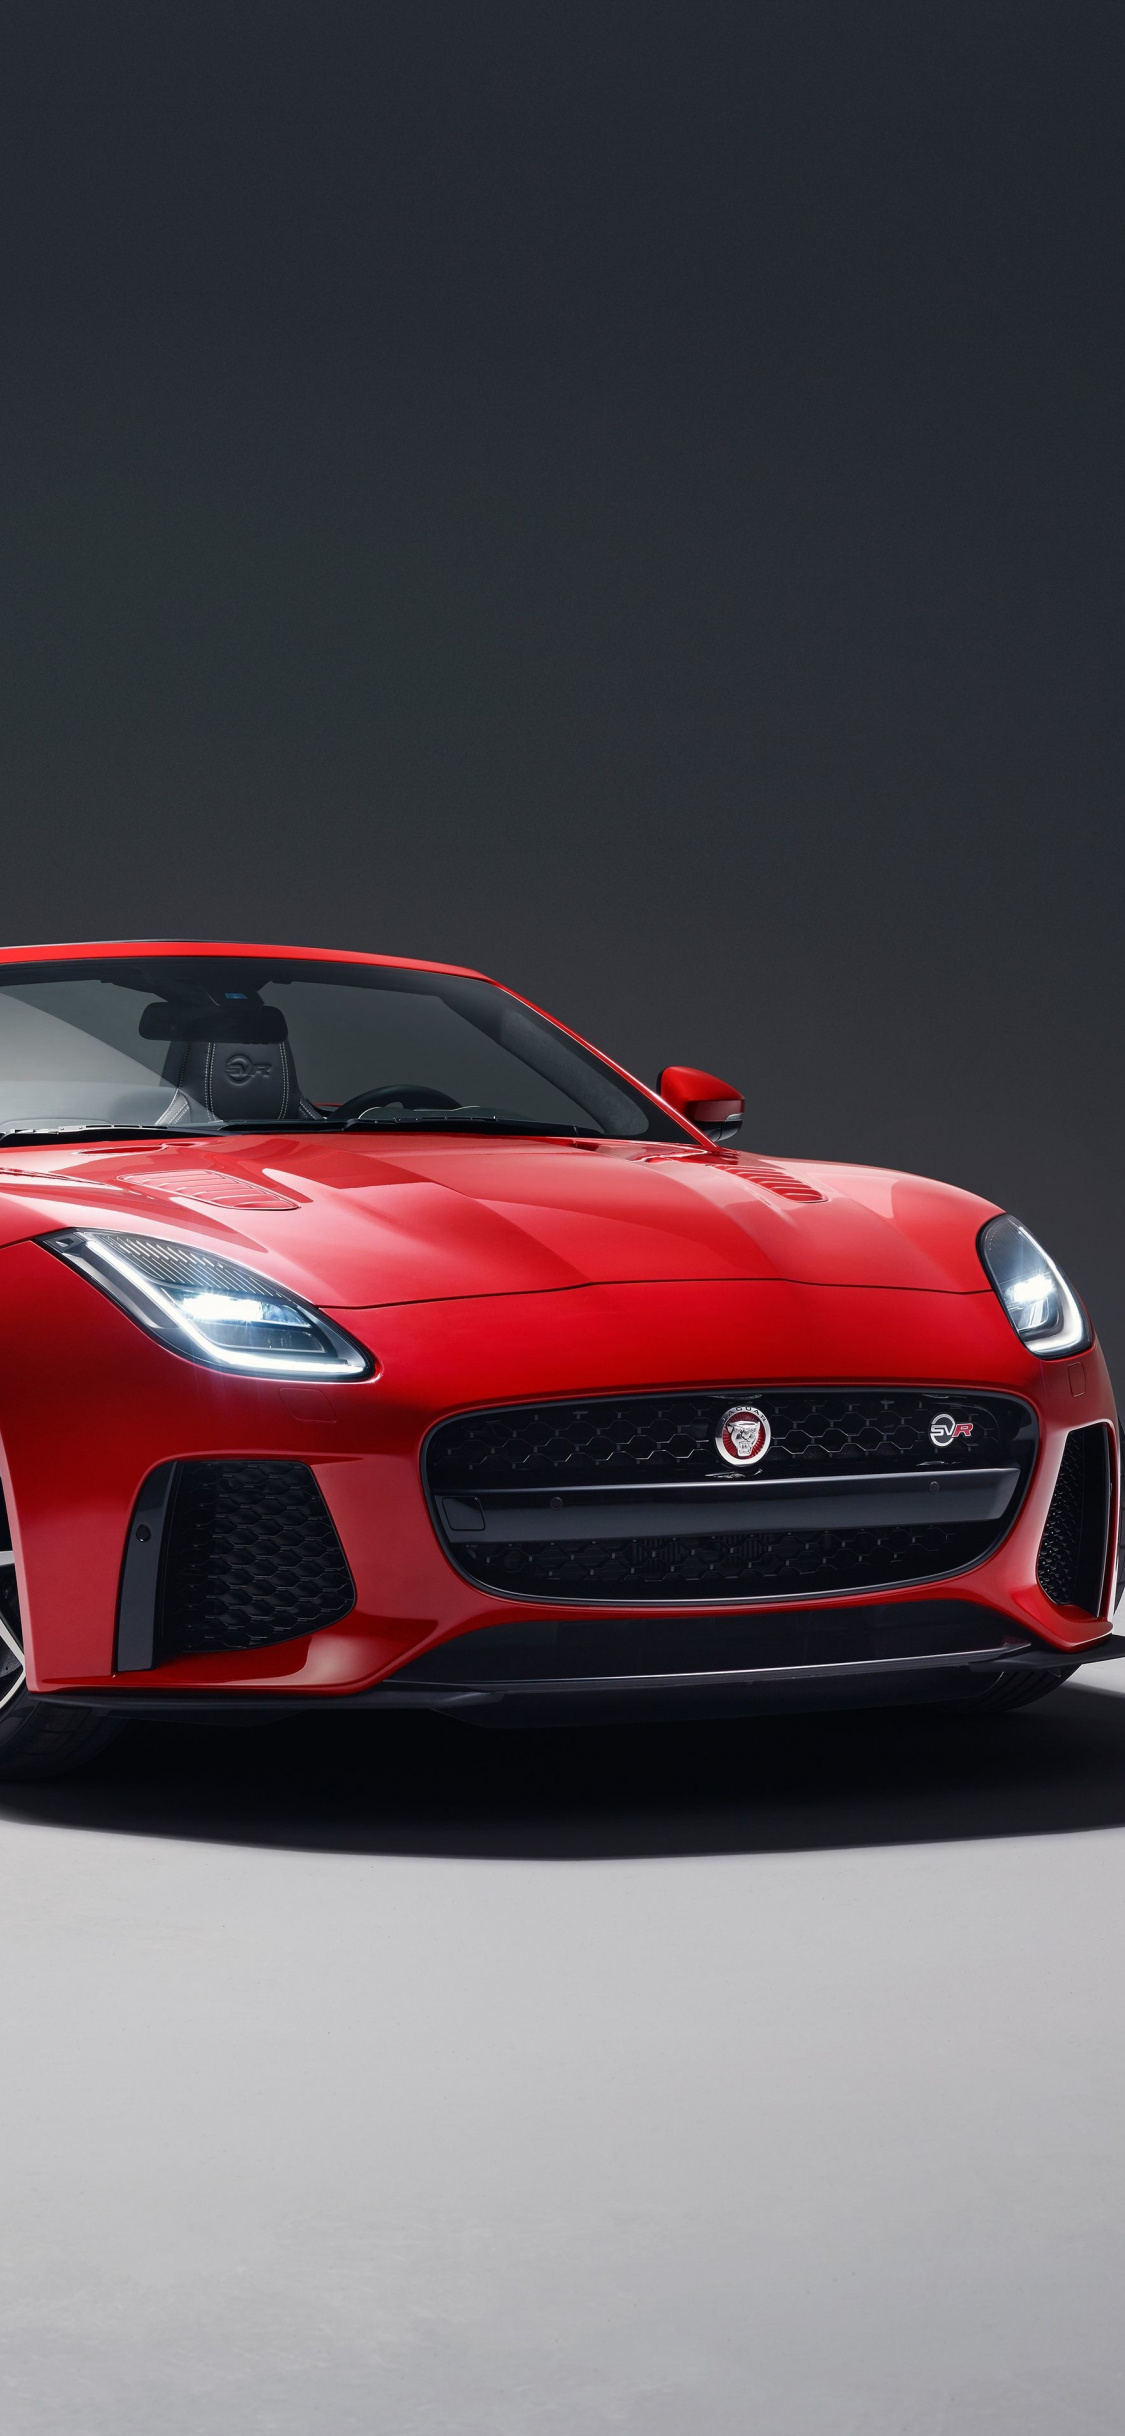 2018, Jaguar F-type Svr, Red, Front, Wallpaper - Jaguar F Type Convertible 2019 - HD Wallpaper 